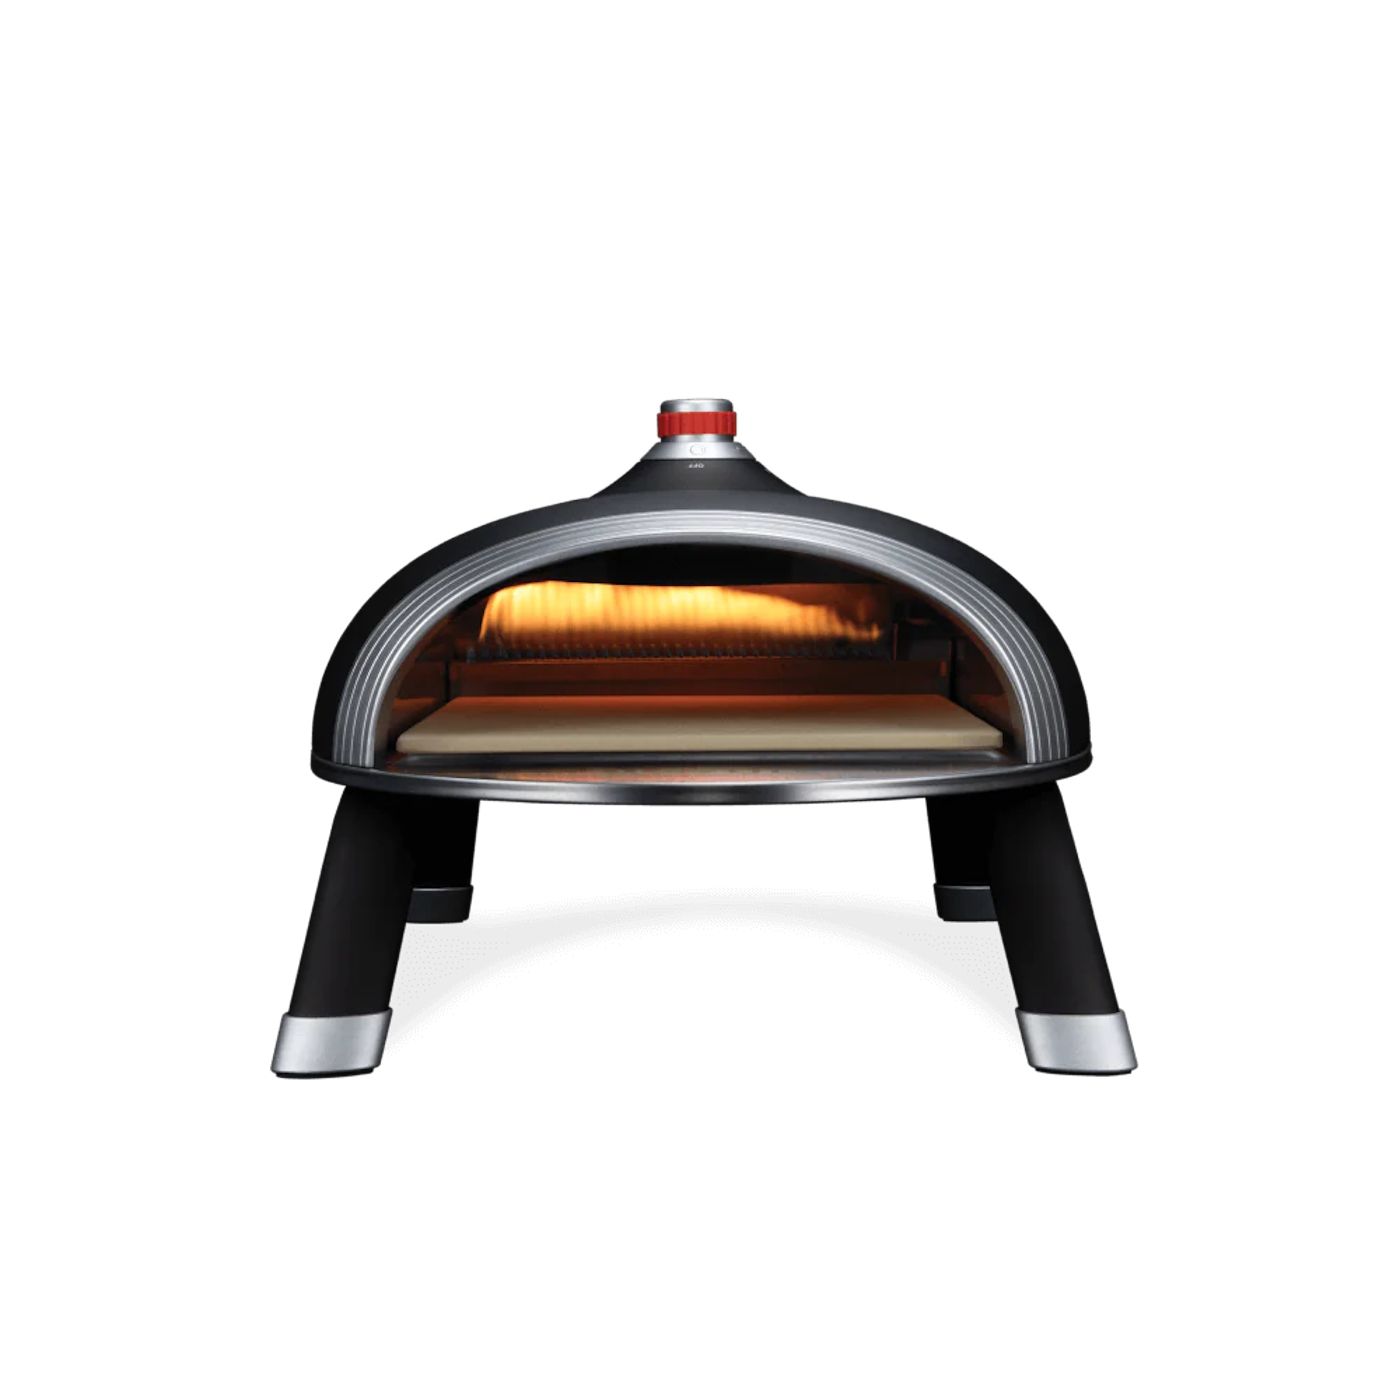 DeliVita Diavolo Gas Fired Pizza Oven - Navy